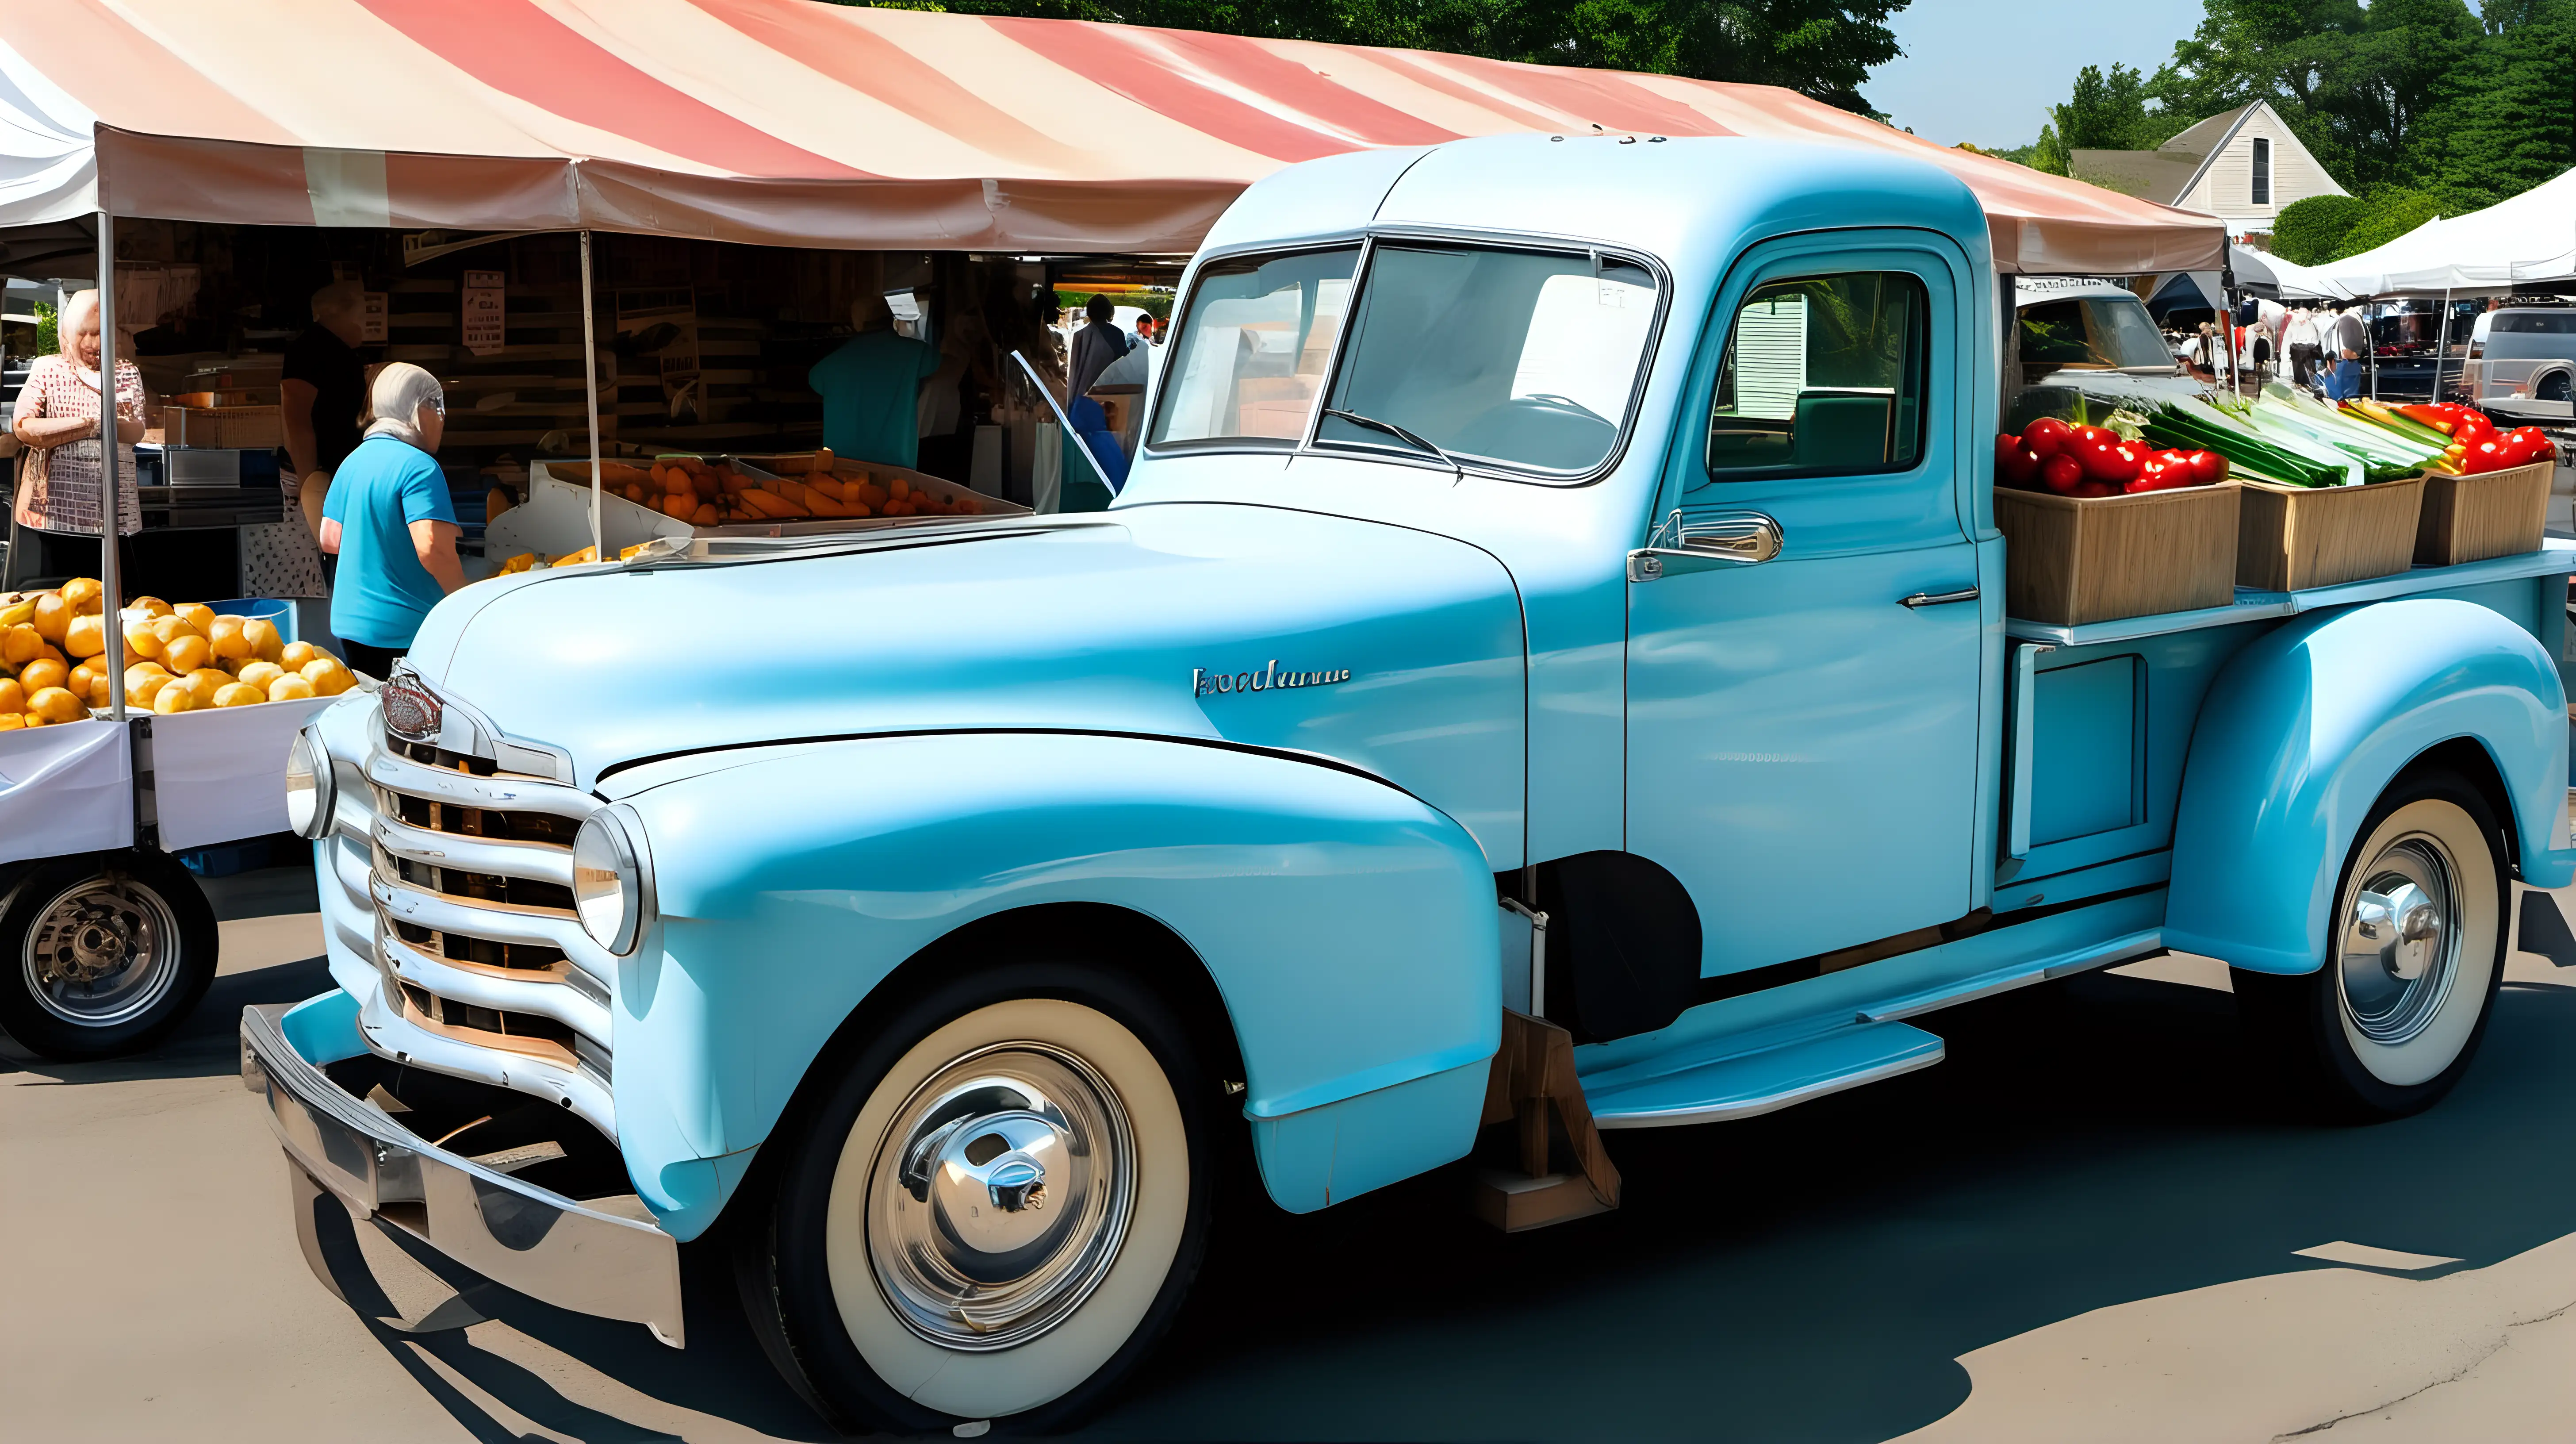 Vintage Baby Blue Truck at Roadside Farmers Market